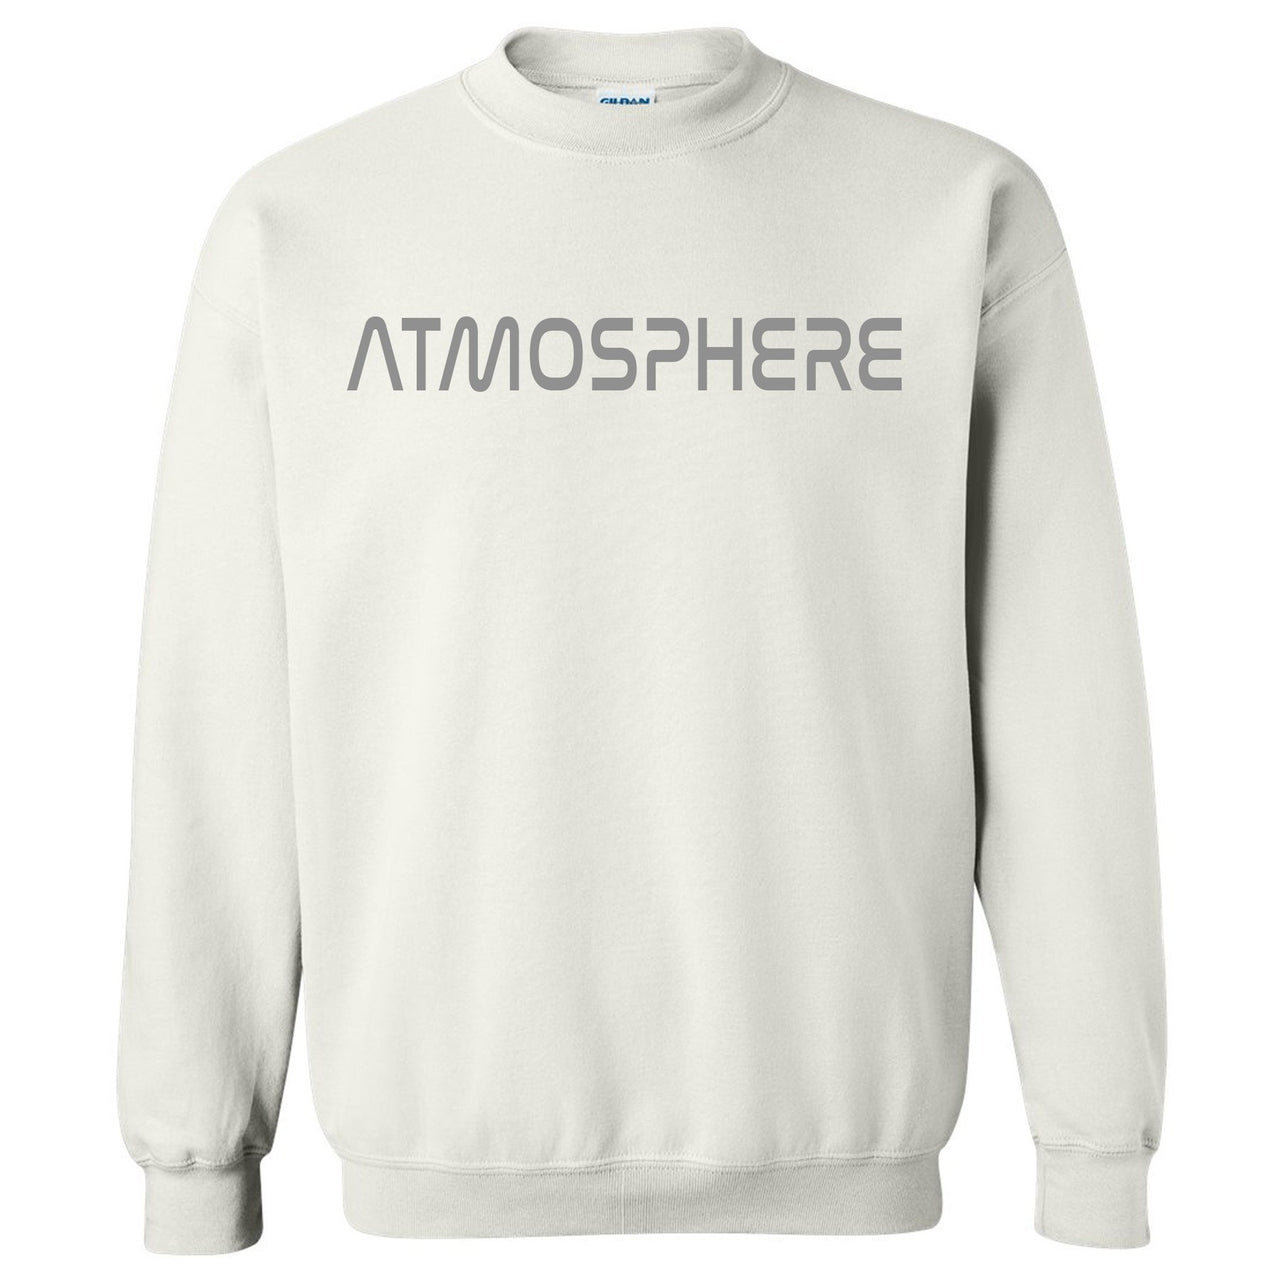 Atmosphere Grey 13s Crewneck | Atmosphere, White